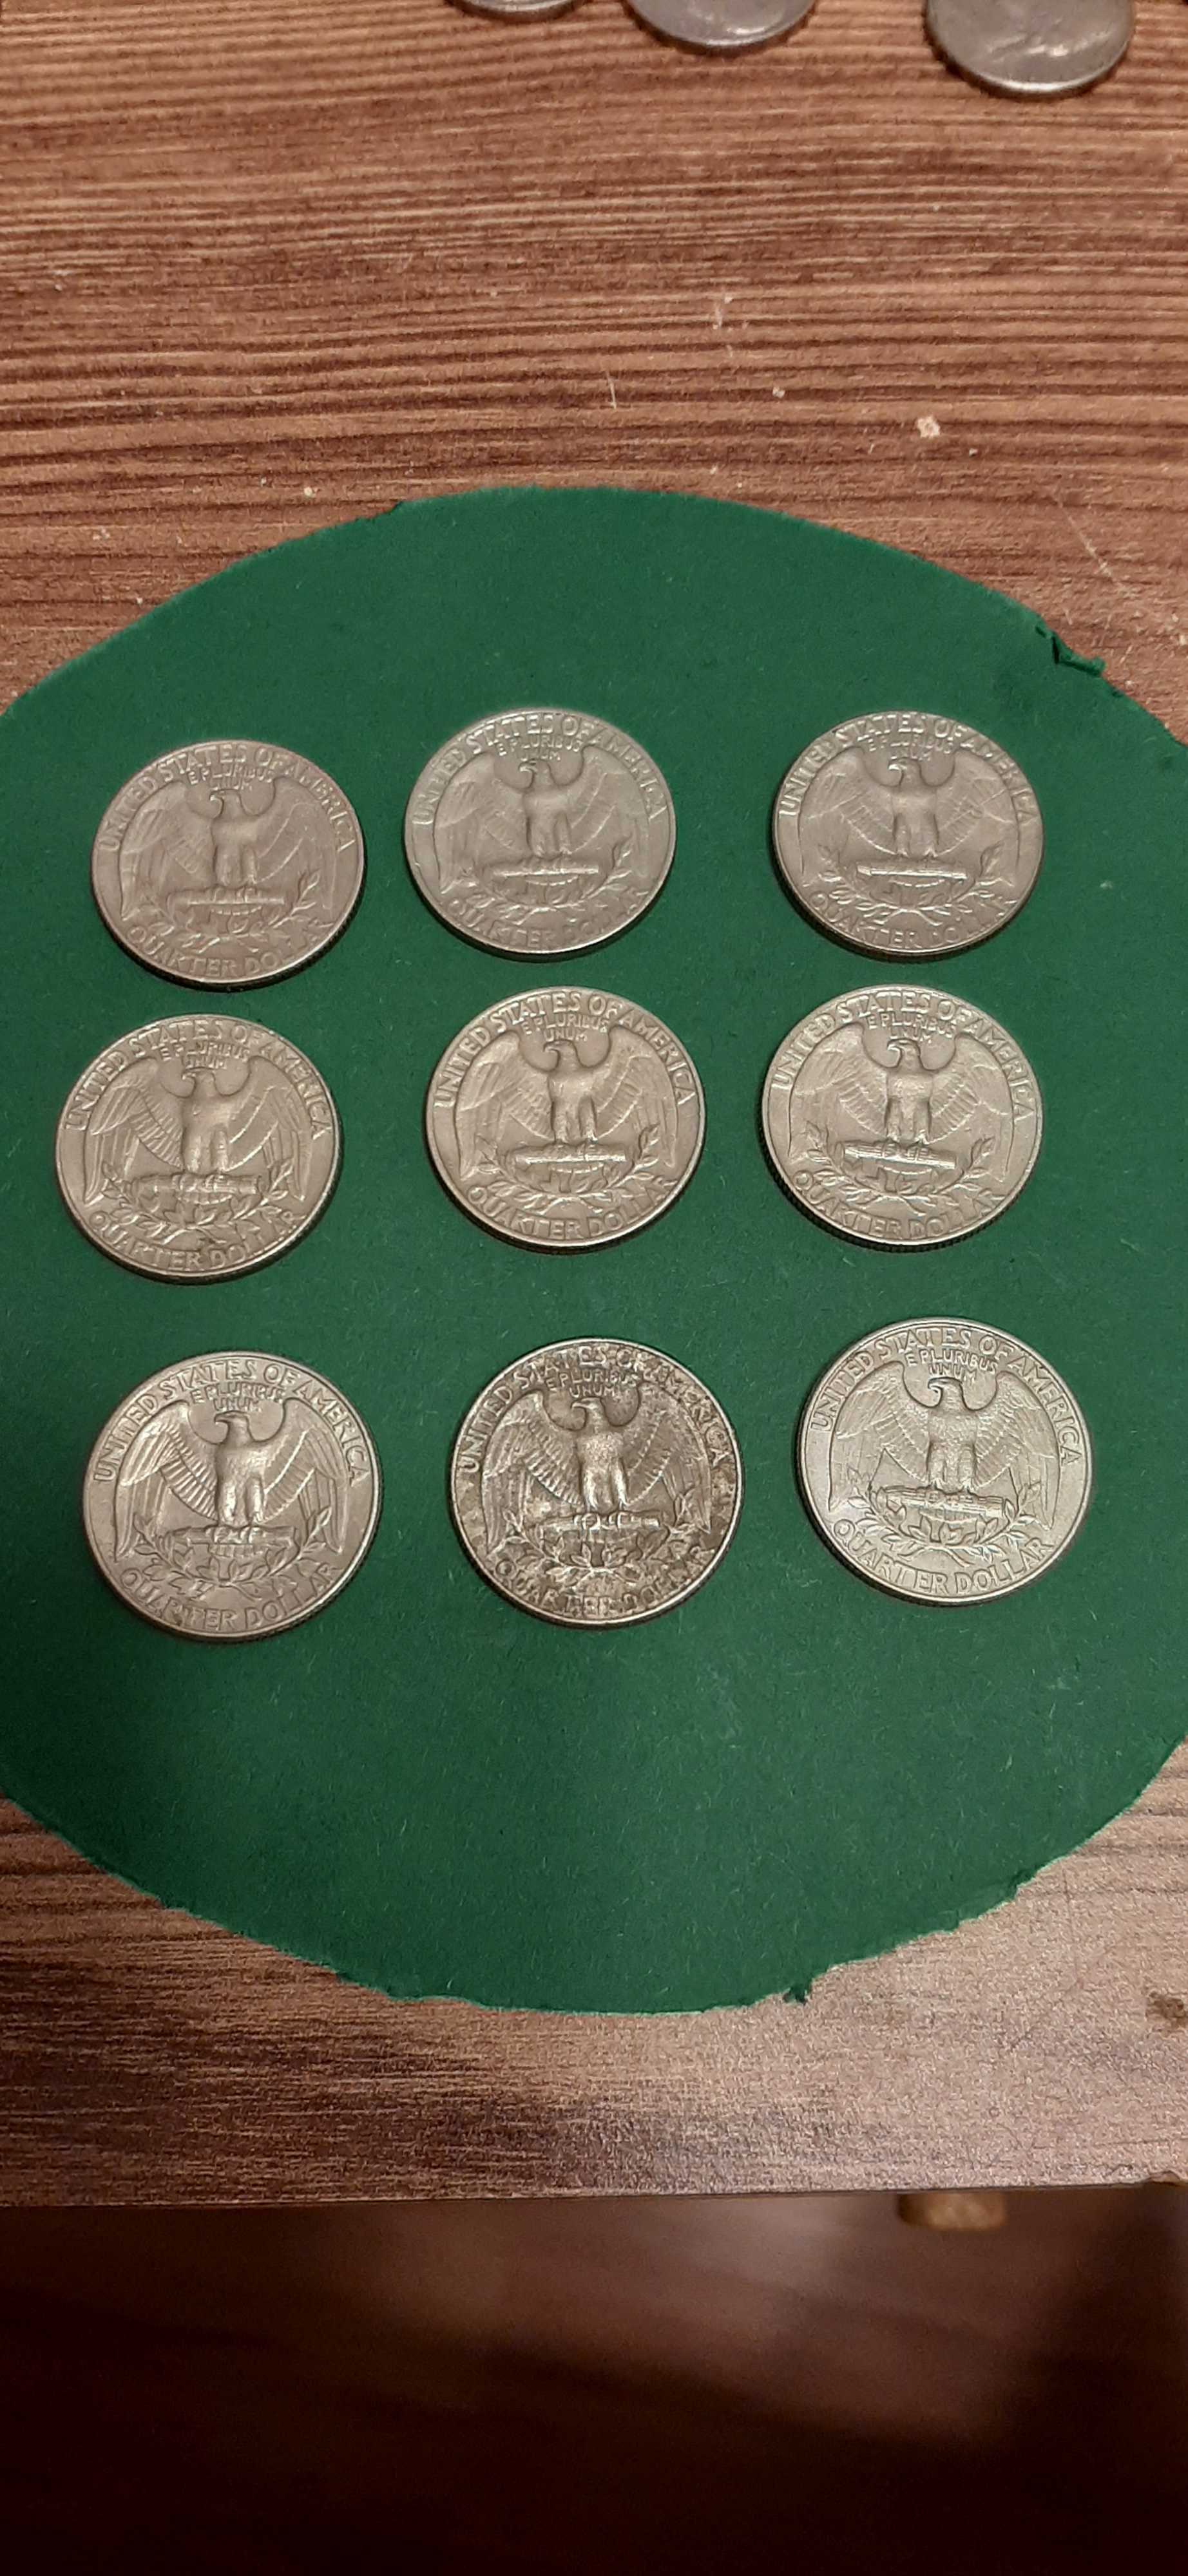 Stare monety amerykańskie